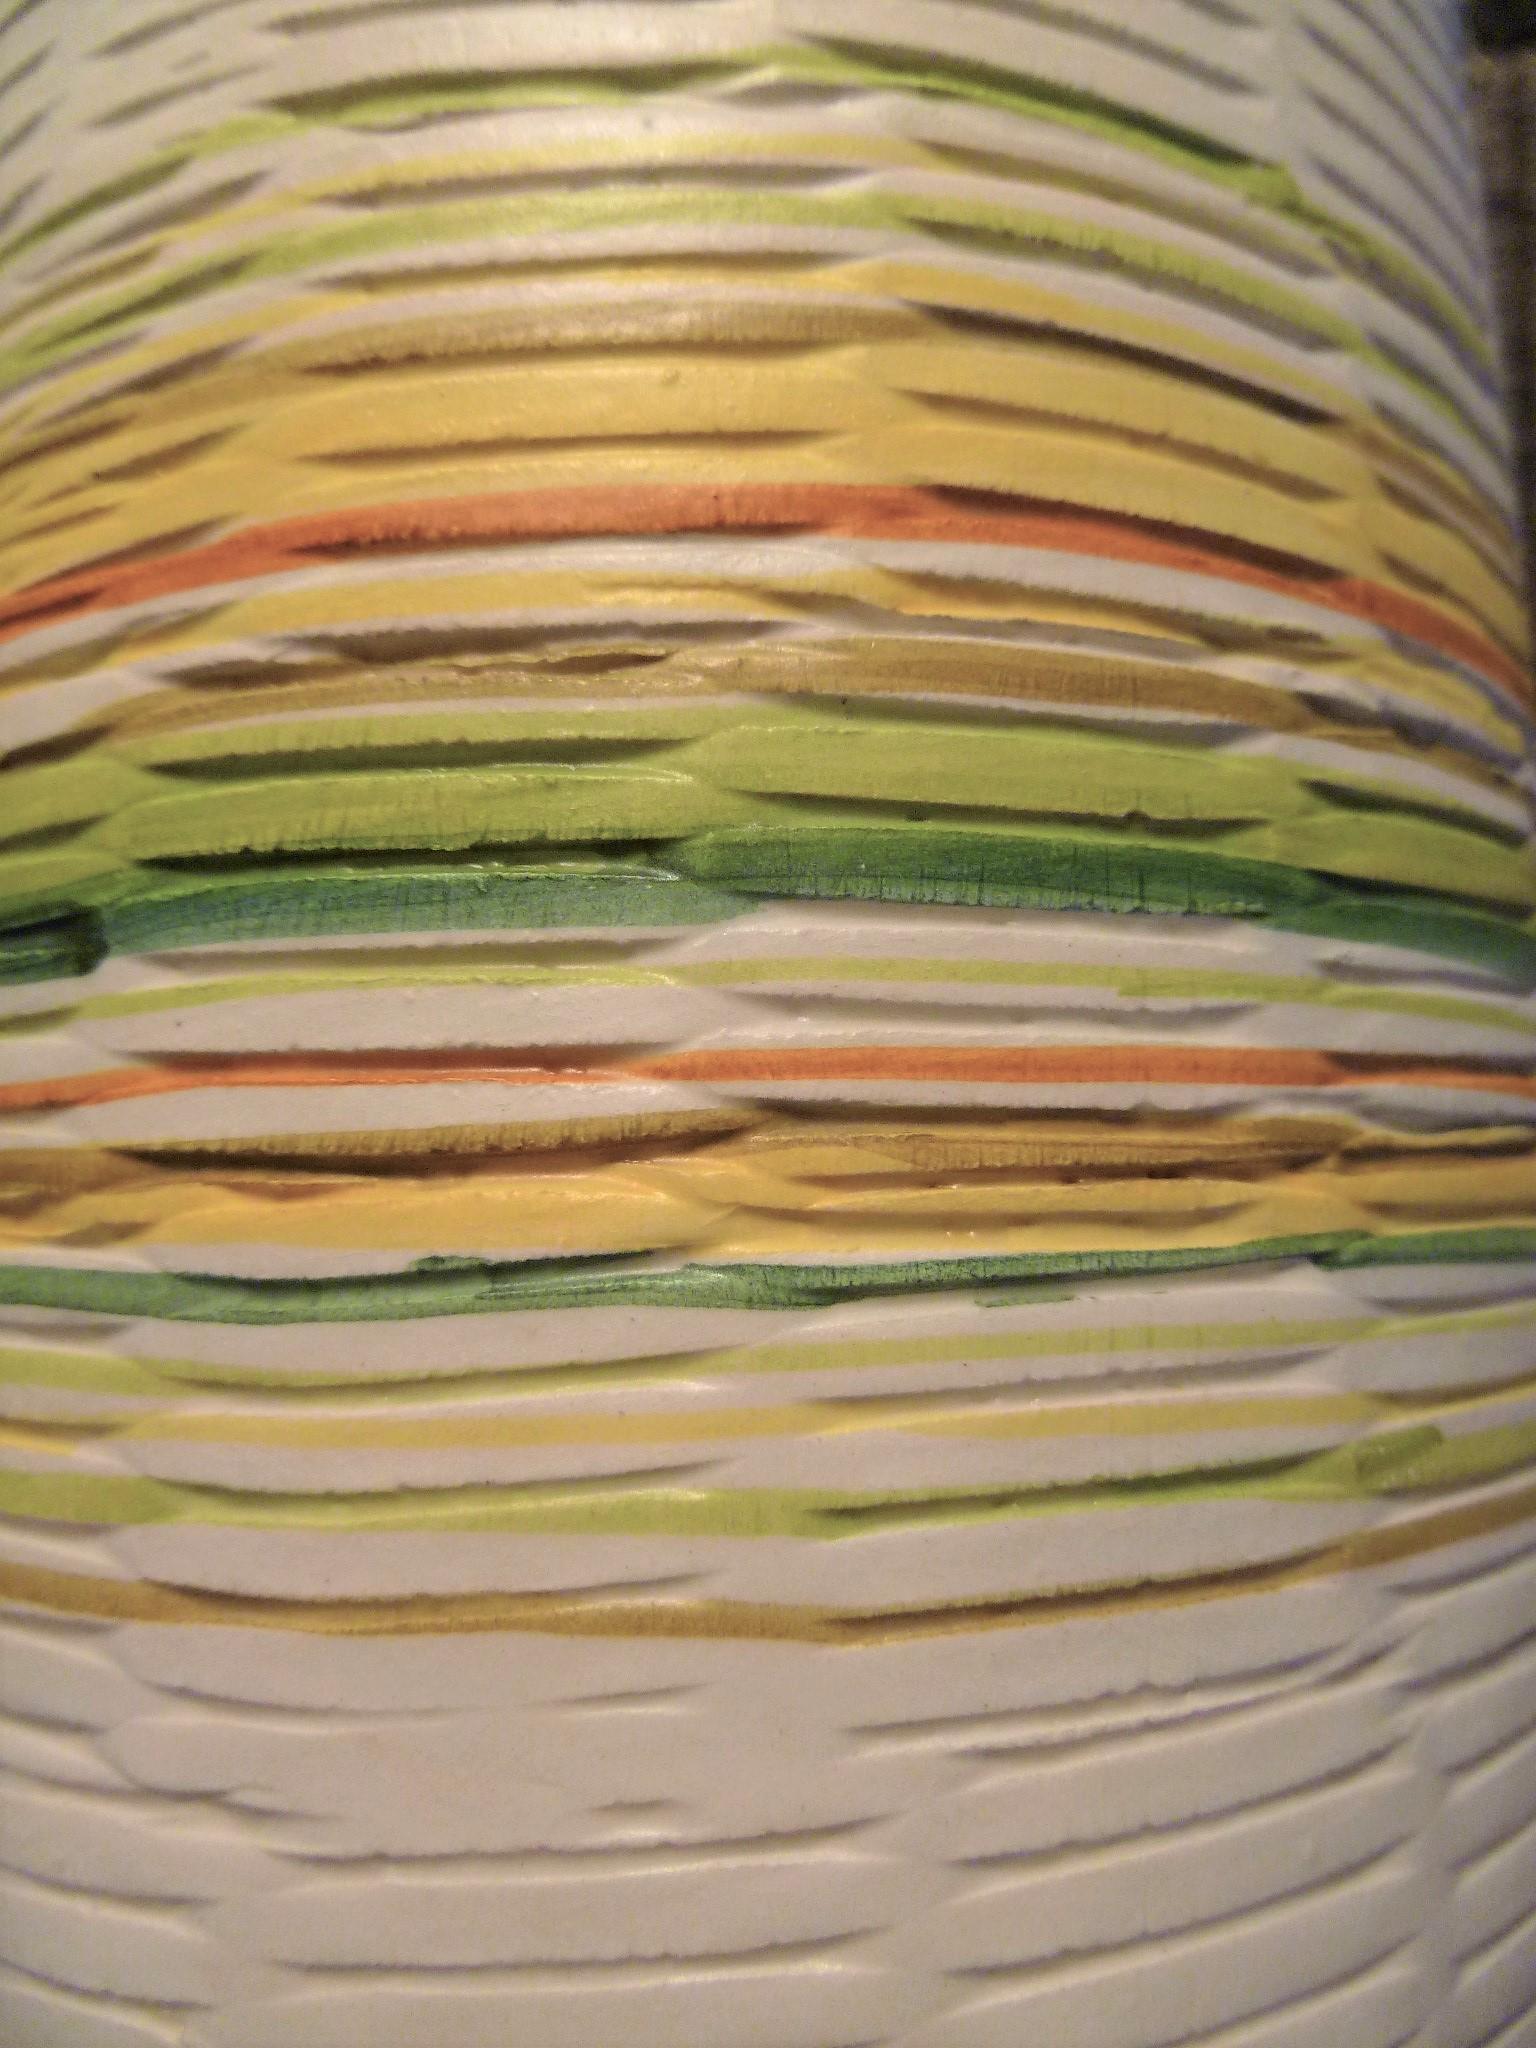 Ceramic Organic Modern Raymor Bitossi Textured Londi Attributed Pottery Vase 1960s Italy